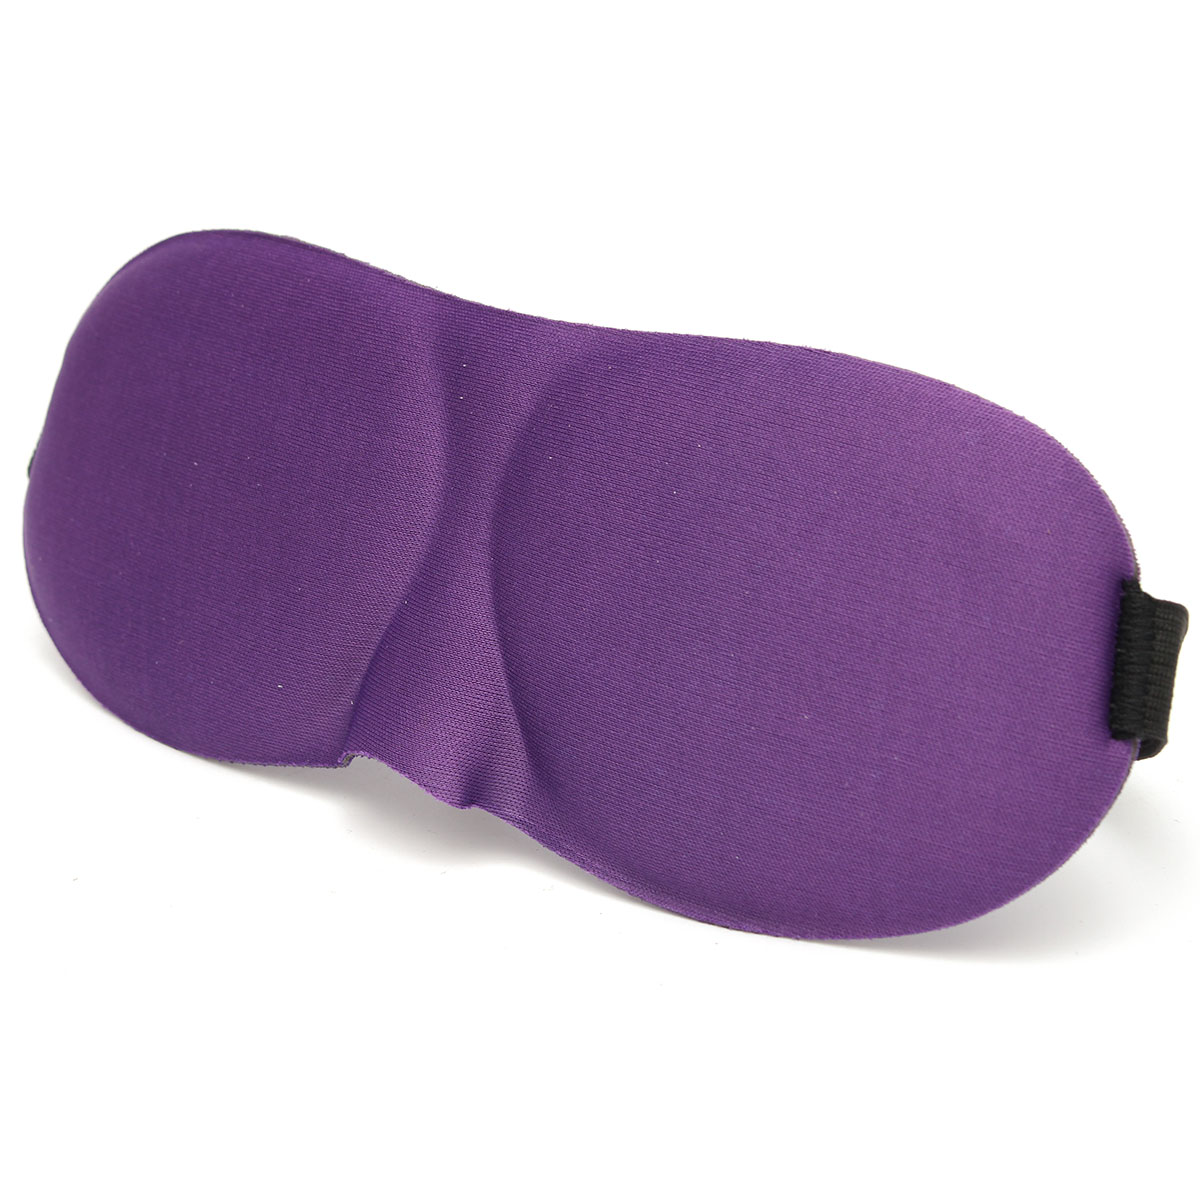 3D Soft Travel Sleep Rest Eye Shade Sleeping Aid Mask Comfort Blinder Shield Padded